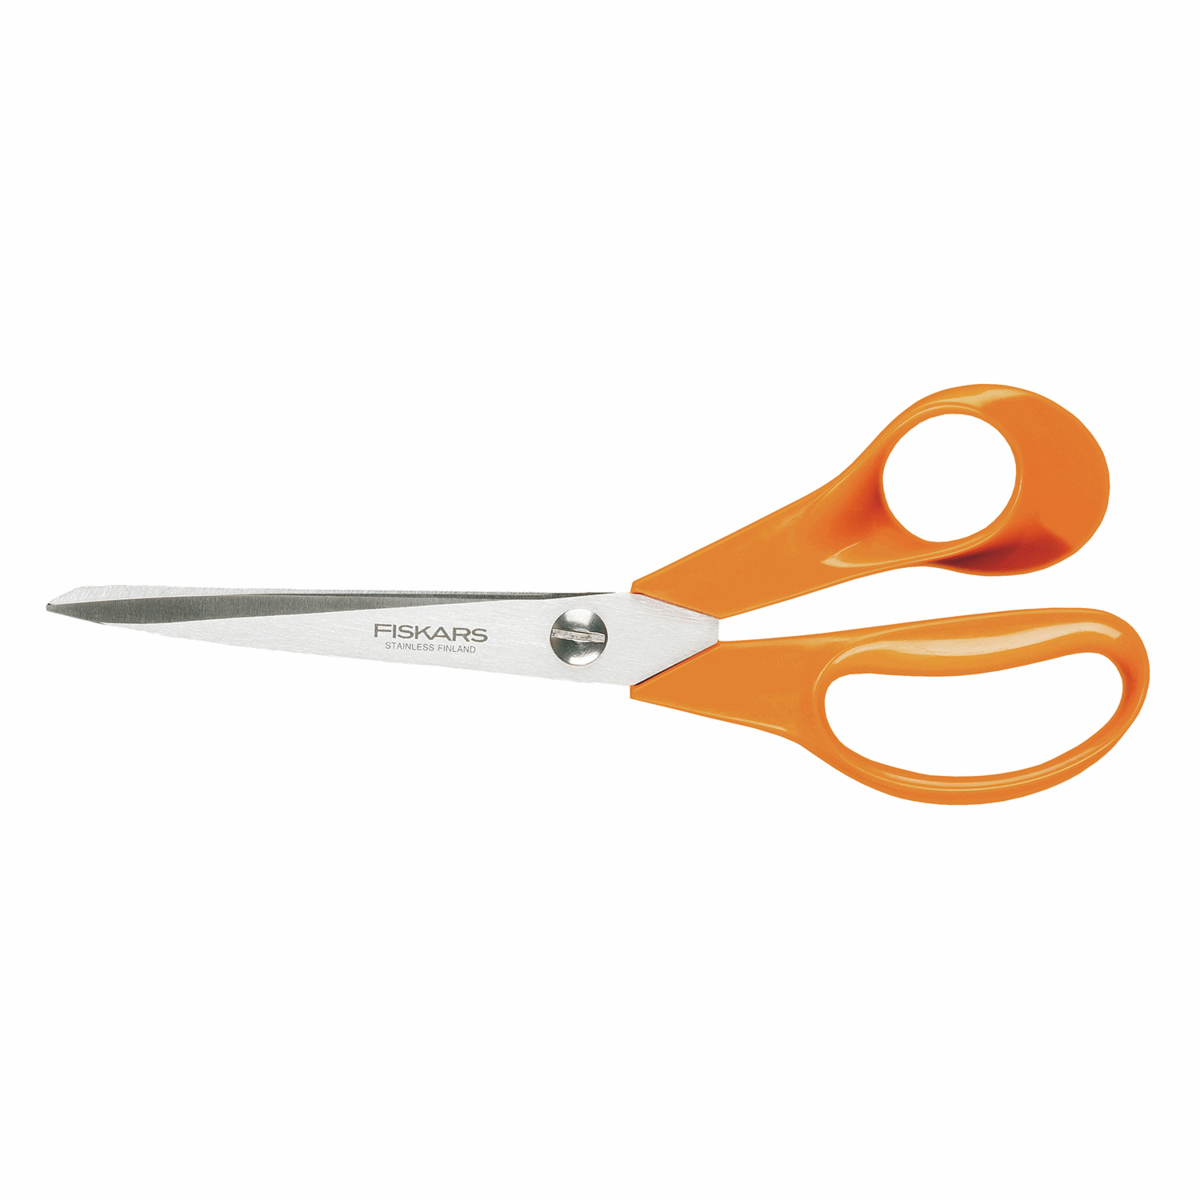 Fiskars Scissors - General Purpose Right Handed 21cm/8.25in